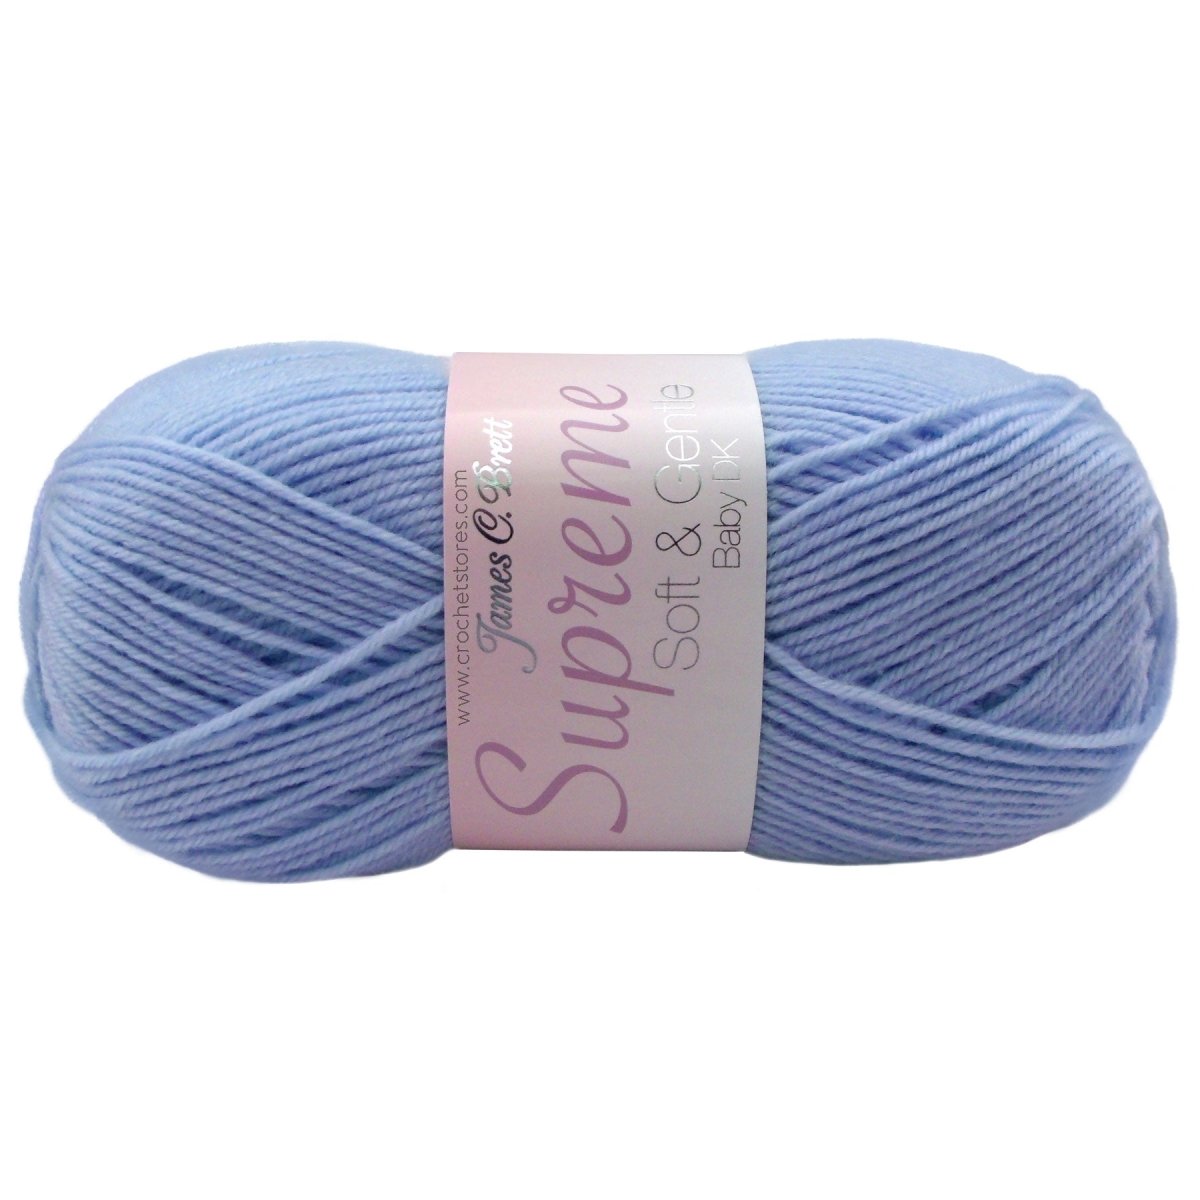 SUPREME BABY DK - CrochetstoresSNG55060019097526